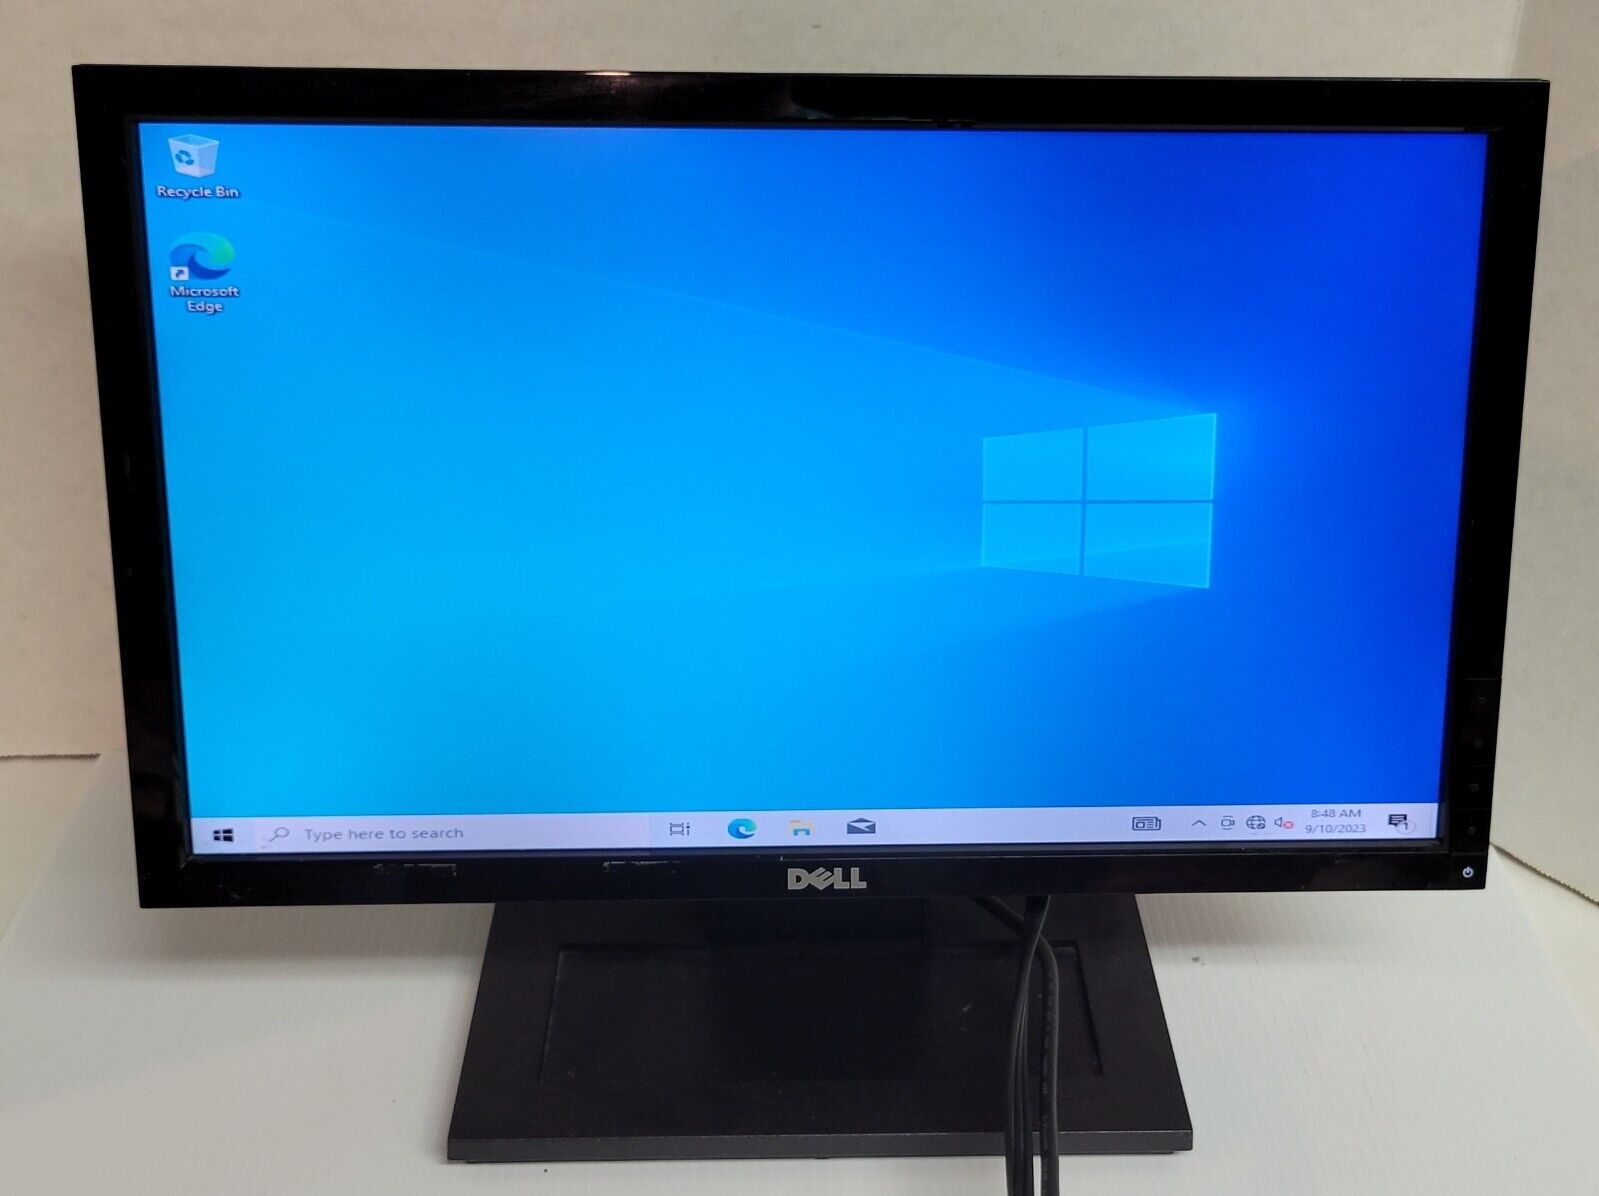 Dell IN1920f 18.5 inch widescreen LCD monitor